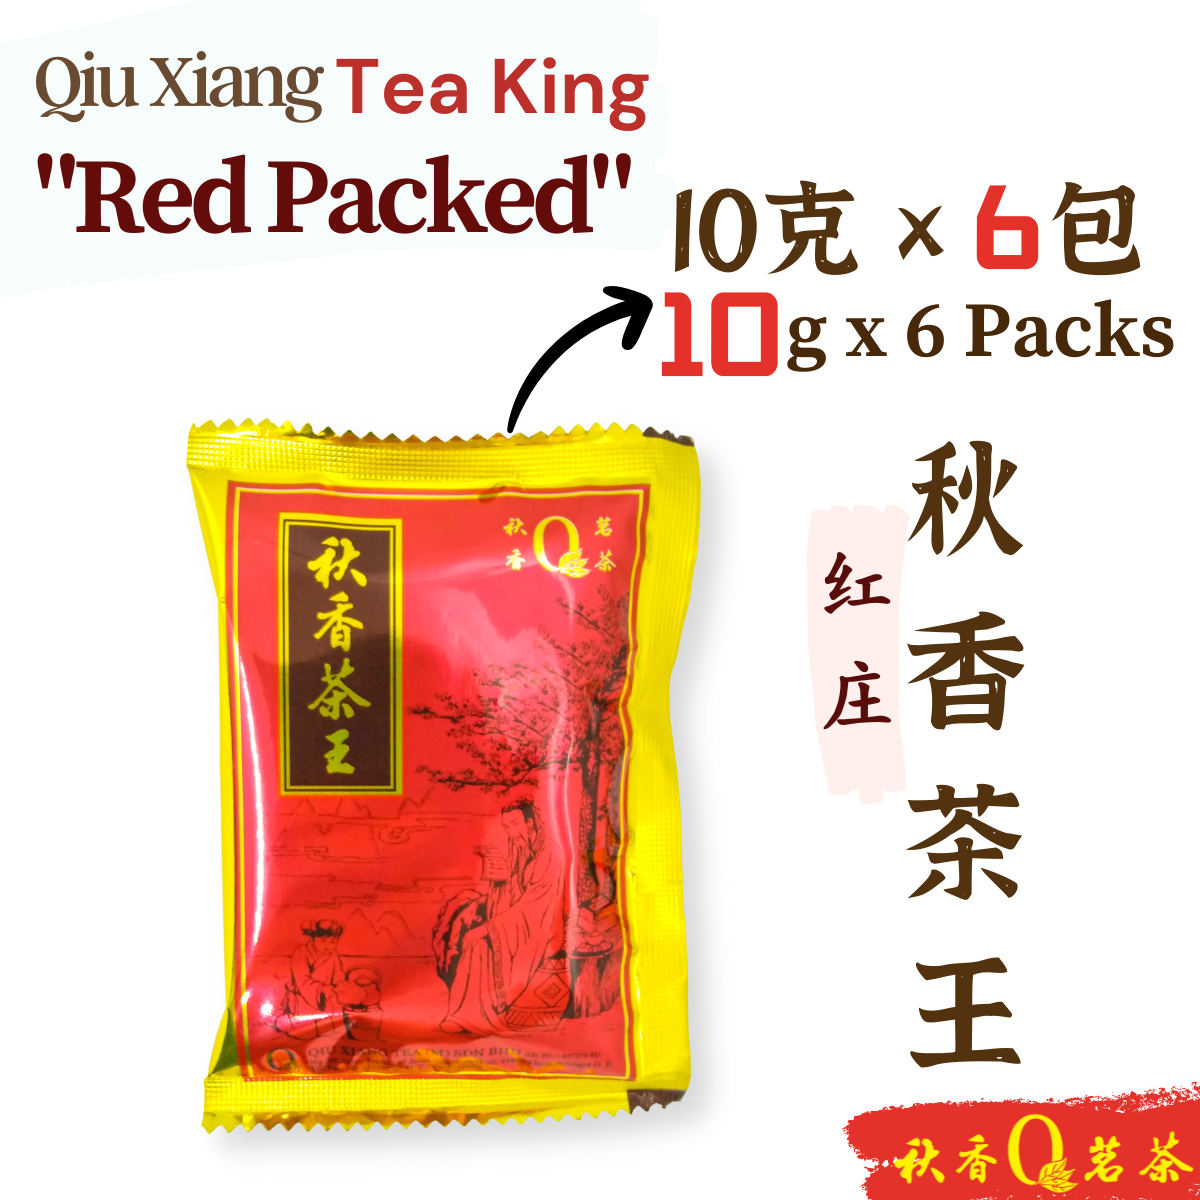 秋香茶王红庄 Qiu Xiang Tea King "Red Pack" 【6 Packs x 10g】 | 【乌龙茶 Oolong tea】